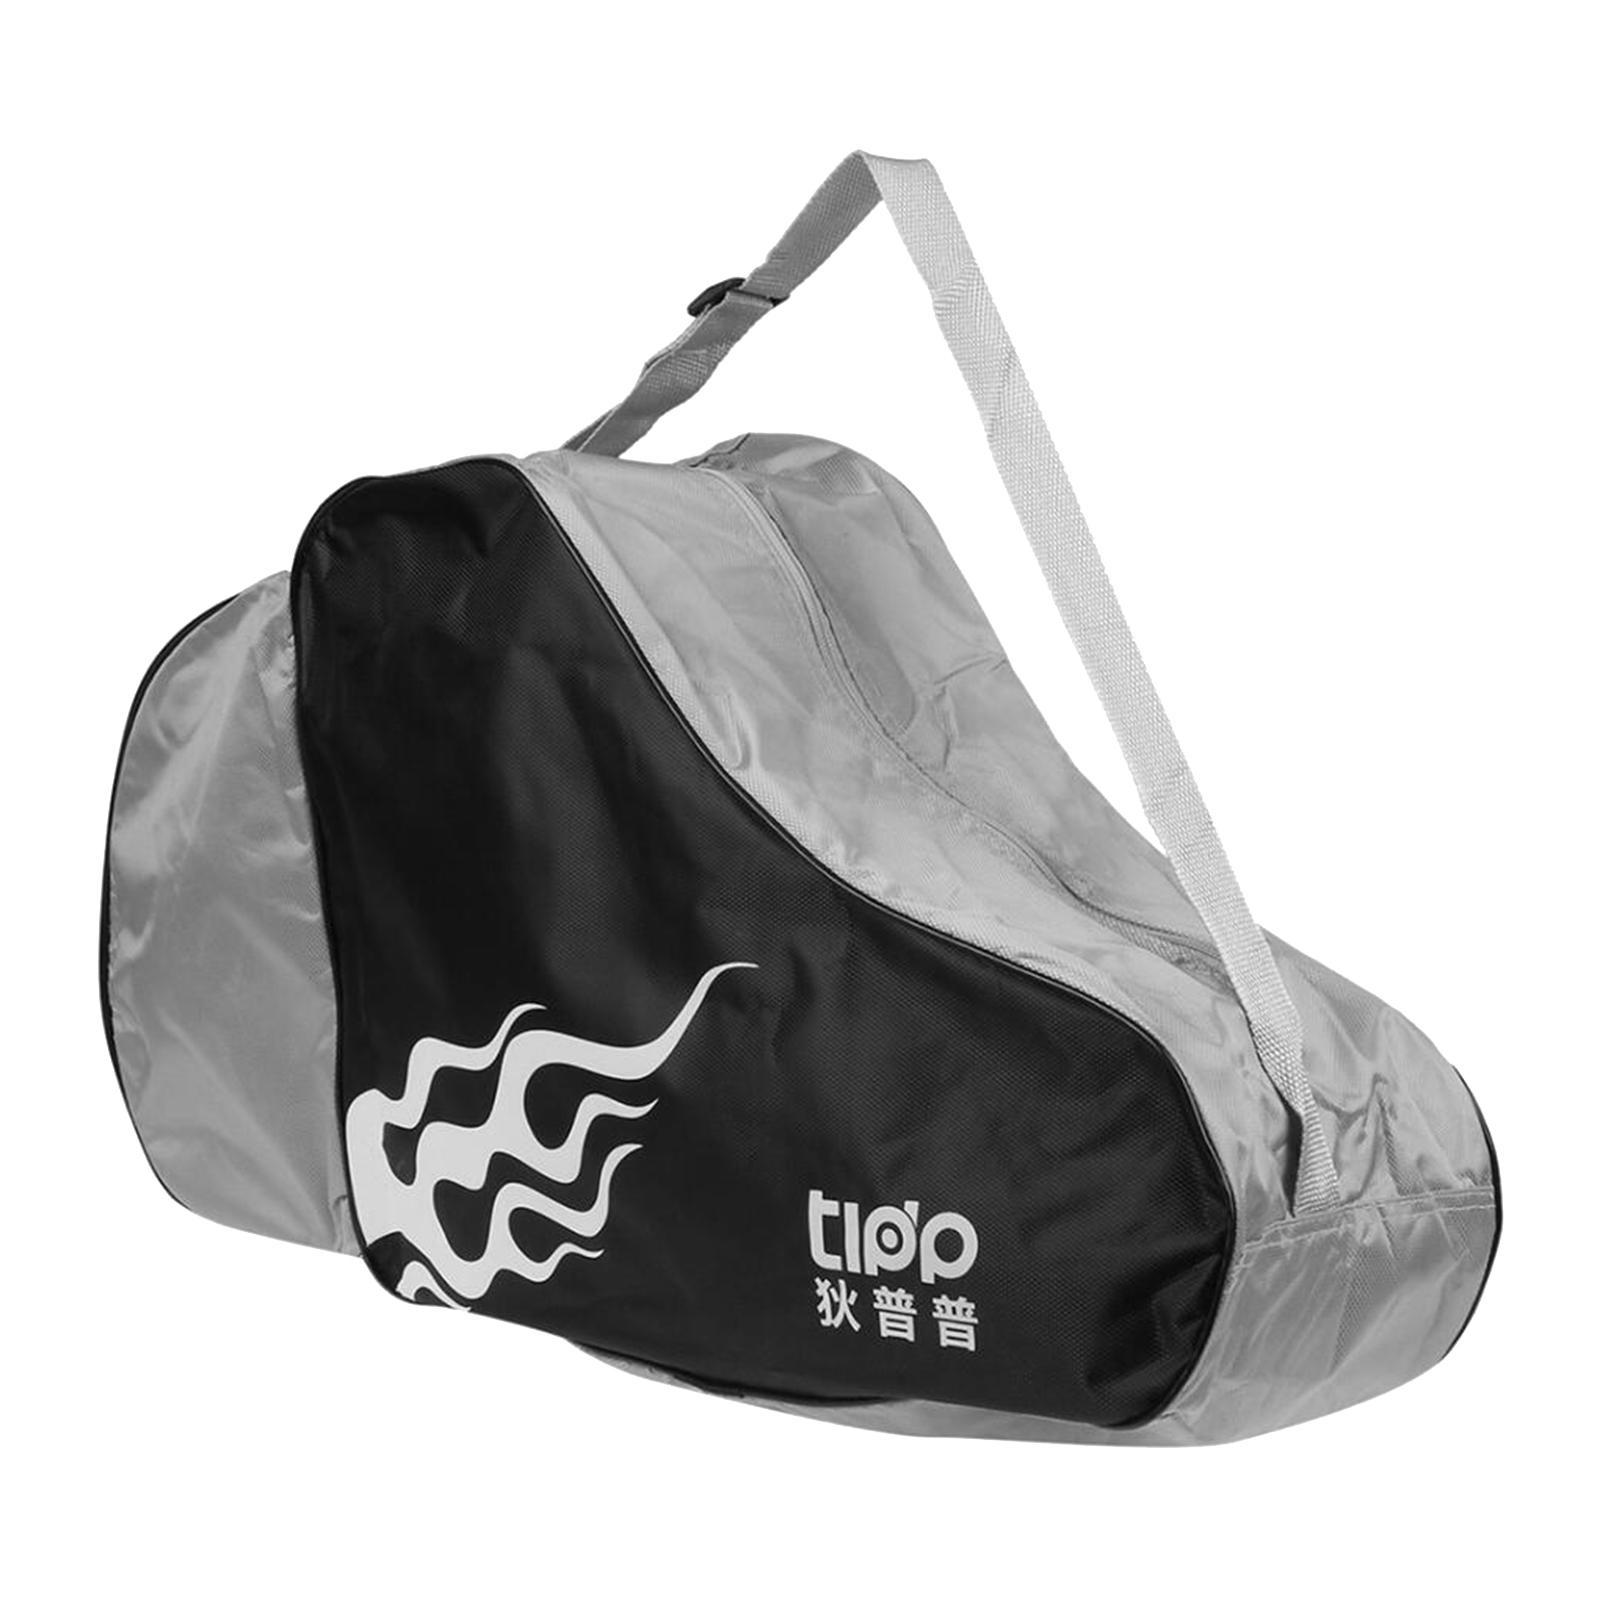 Roller Skating Boots Bag Oxford Cloth Waterproof Handbag Backpack Black